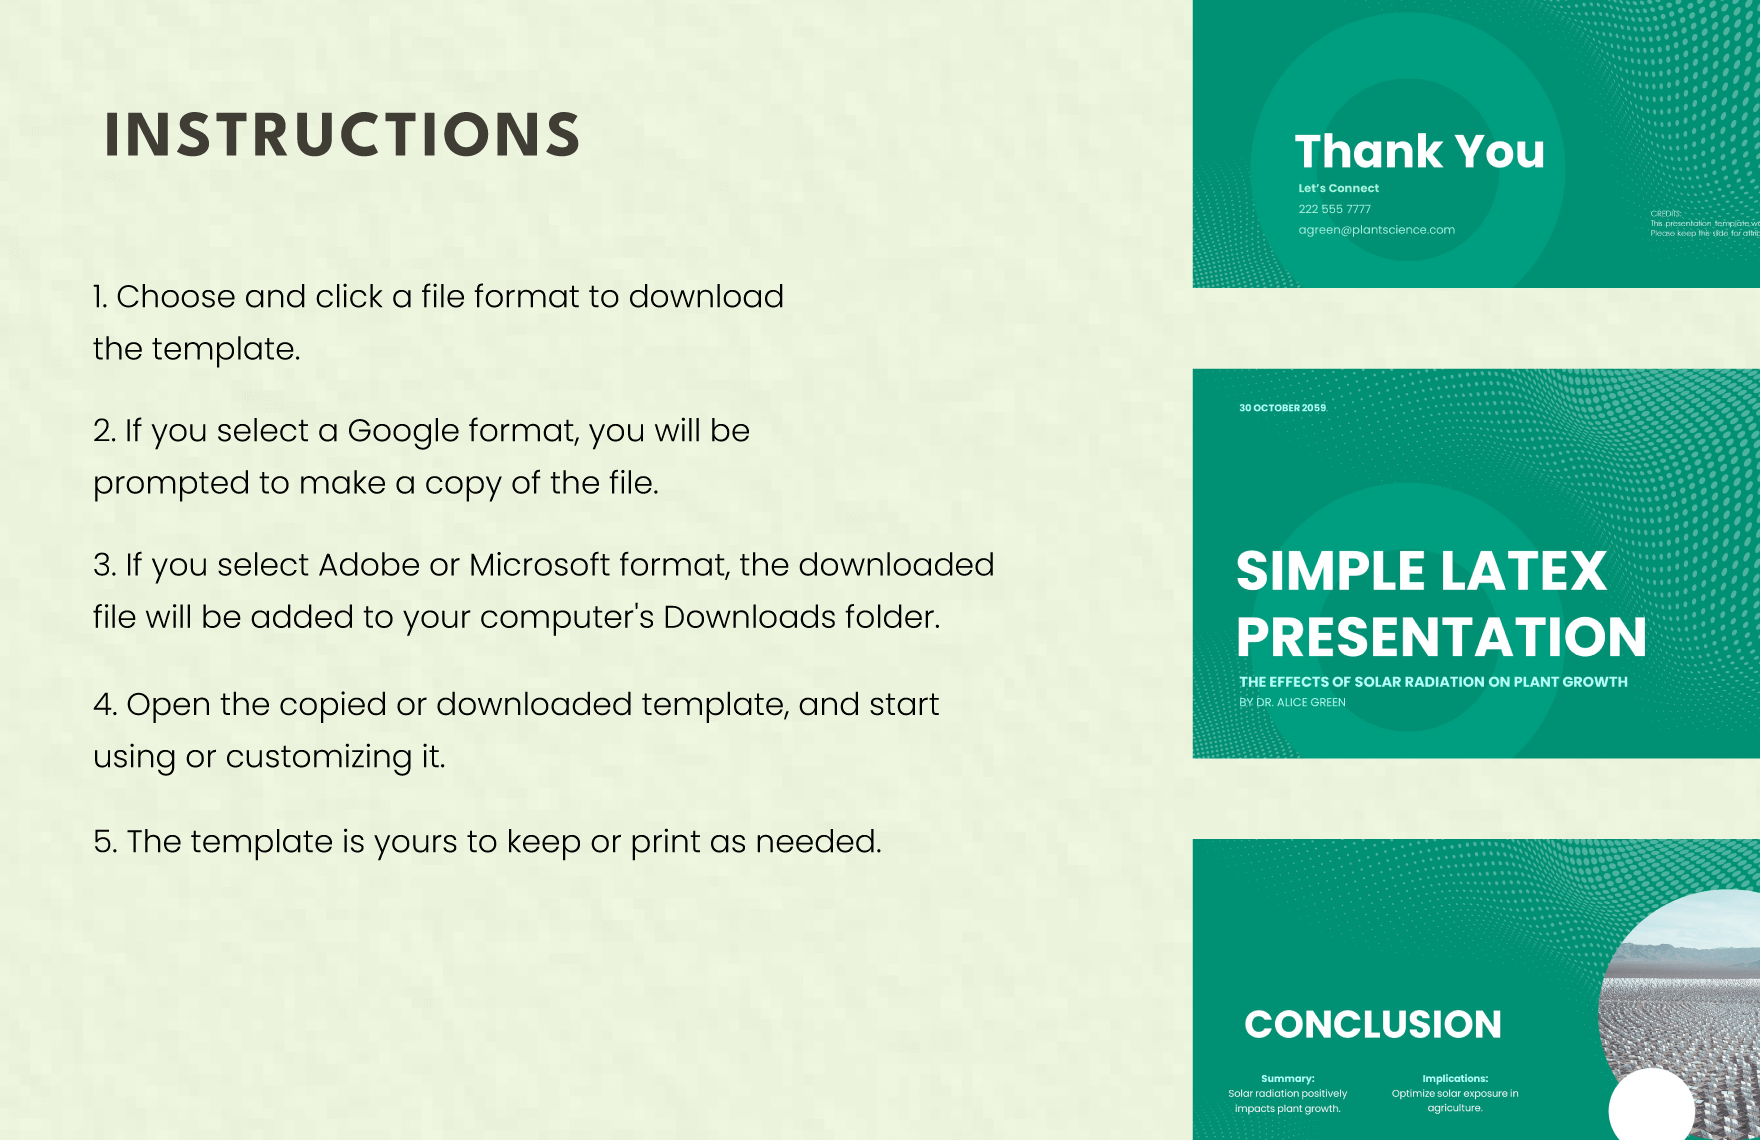 Simple Latex Presentation